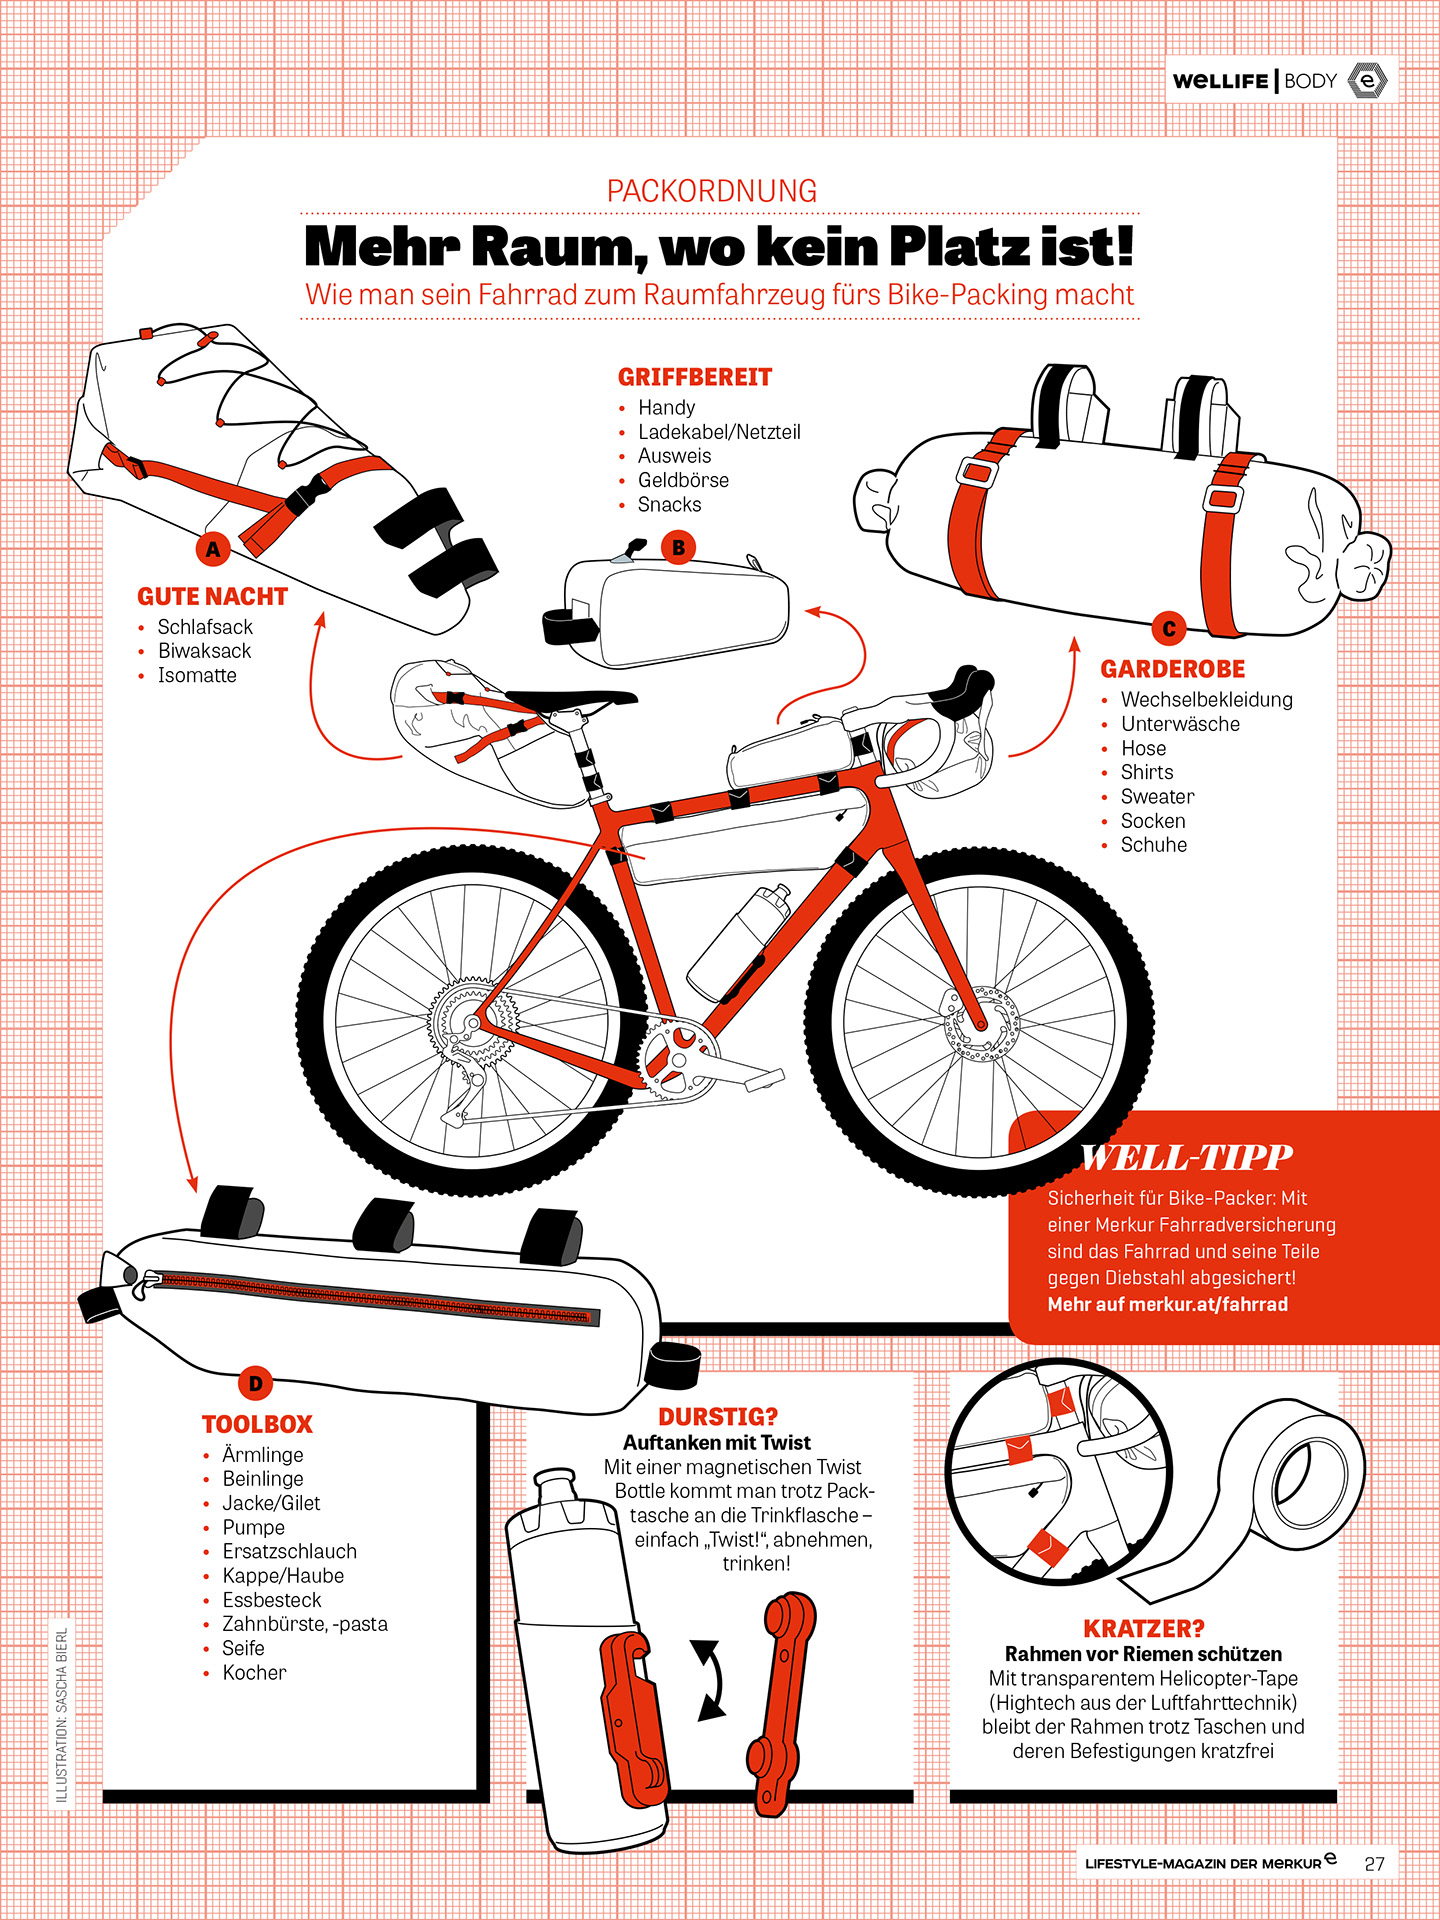 Bike-Packing Merkur/Wellife